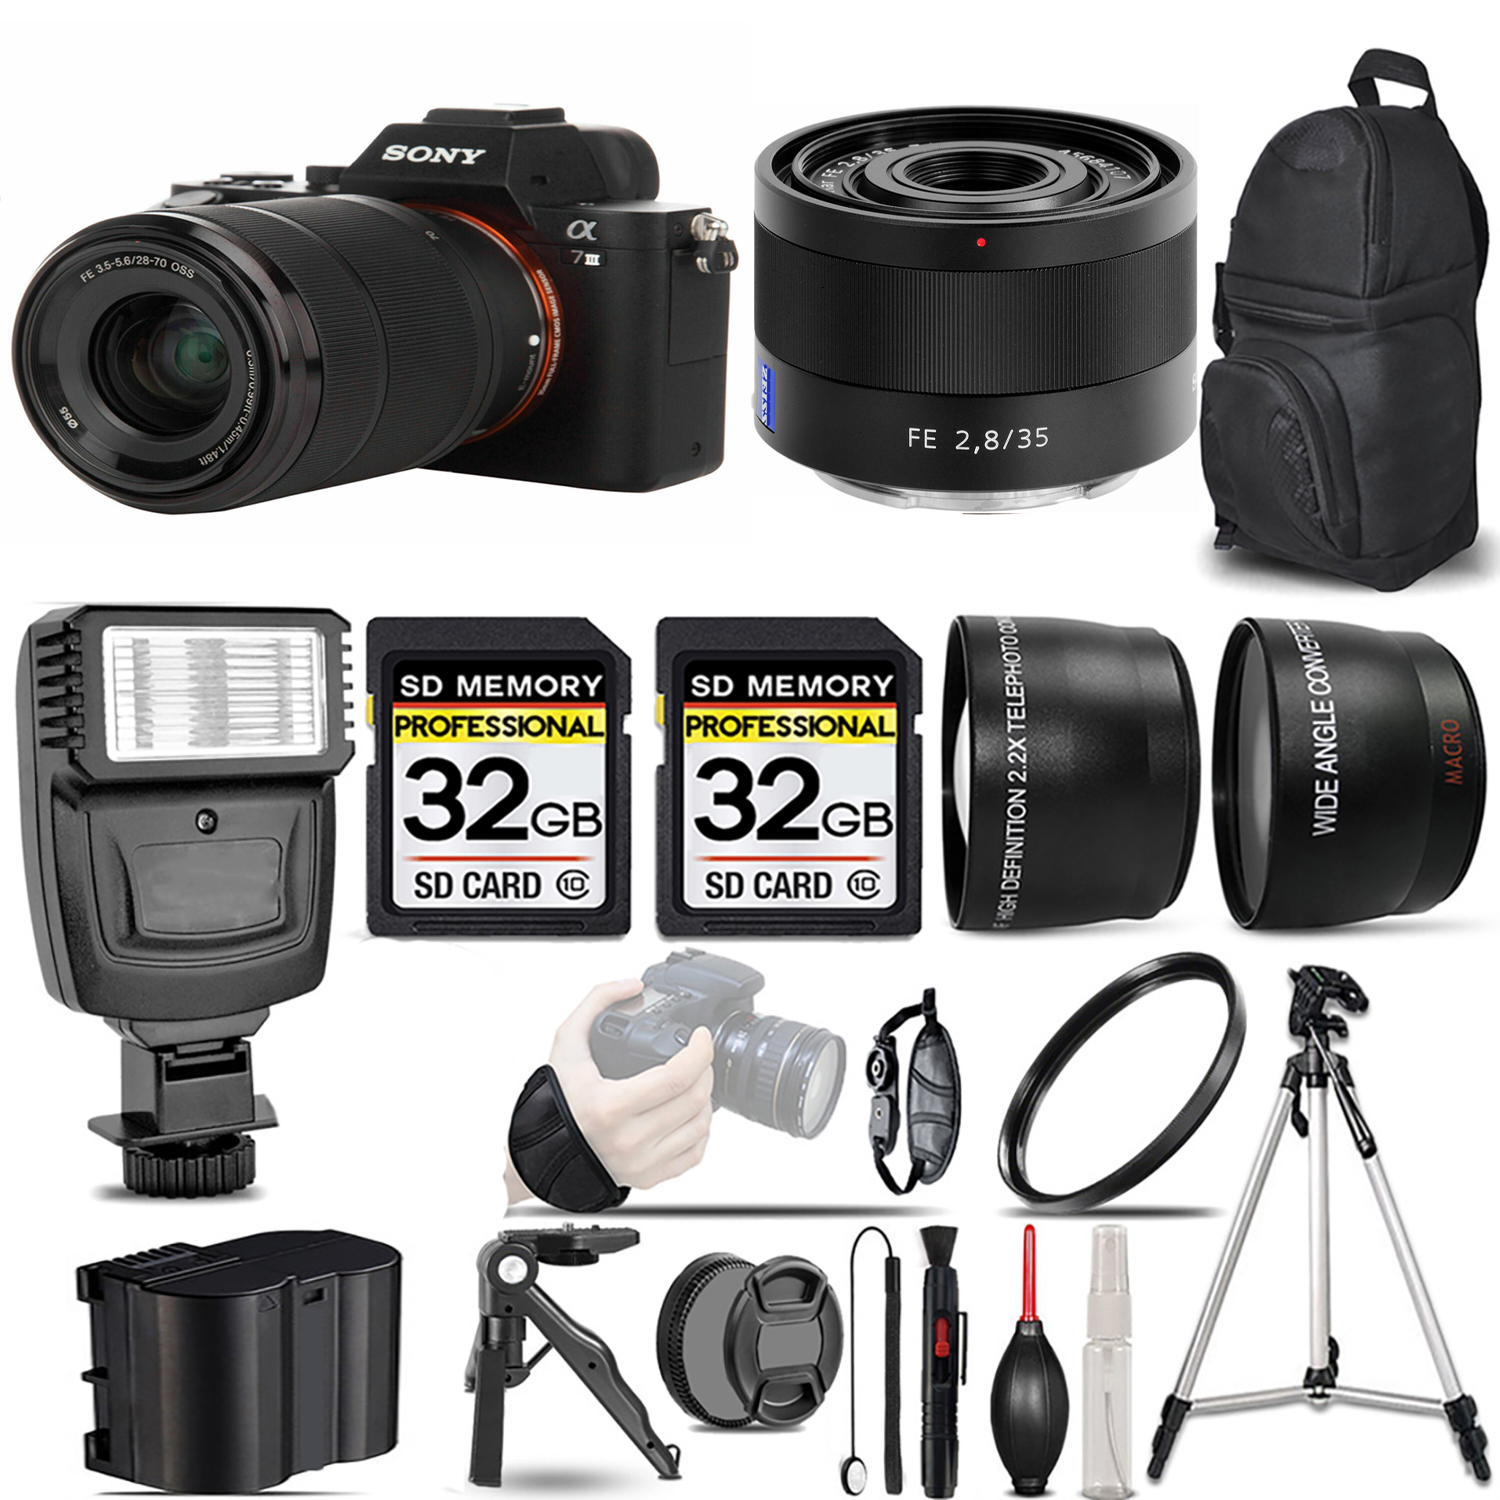 a7 III  Camera + 28-70mm Lens + 35mm f/2.8 ZA Lens + Flash + 64GB + UV Filter *FREE SHIPPING*